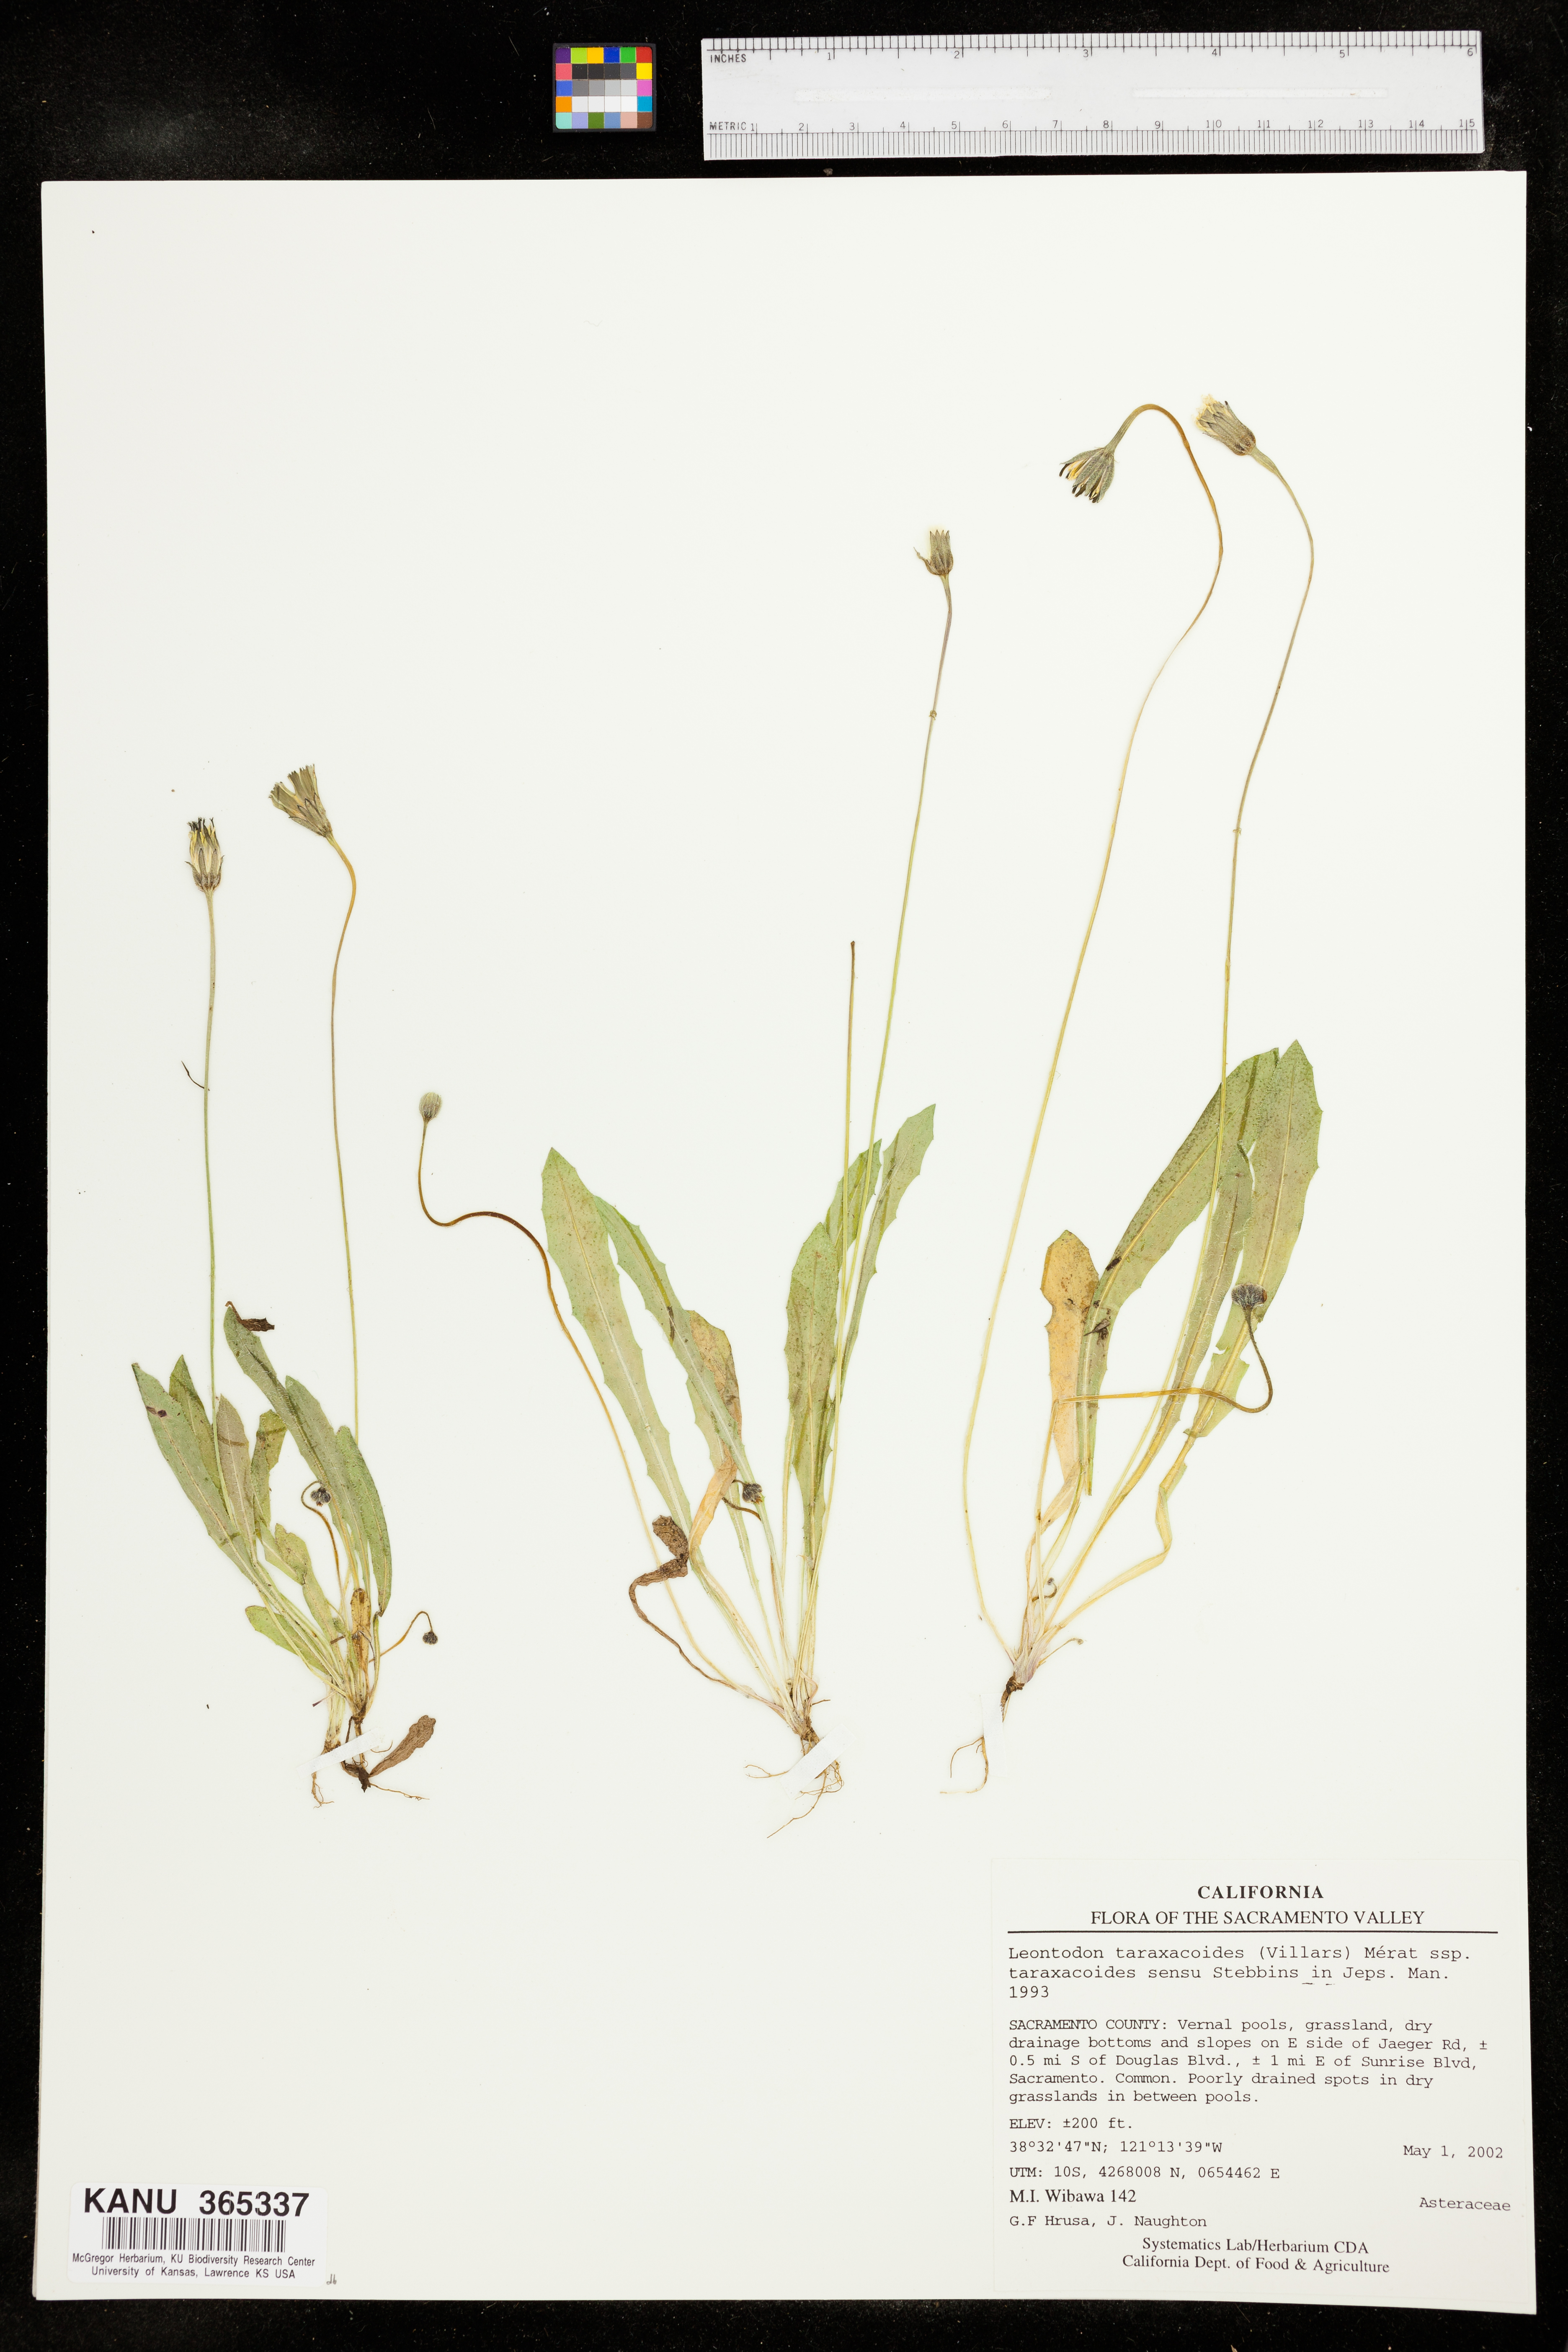 Leontodon taraxacoides image